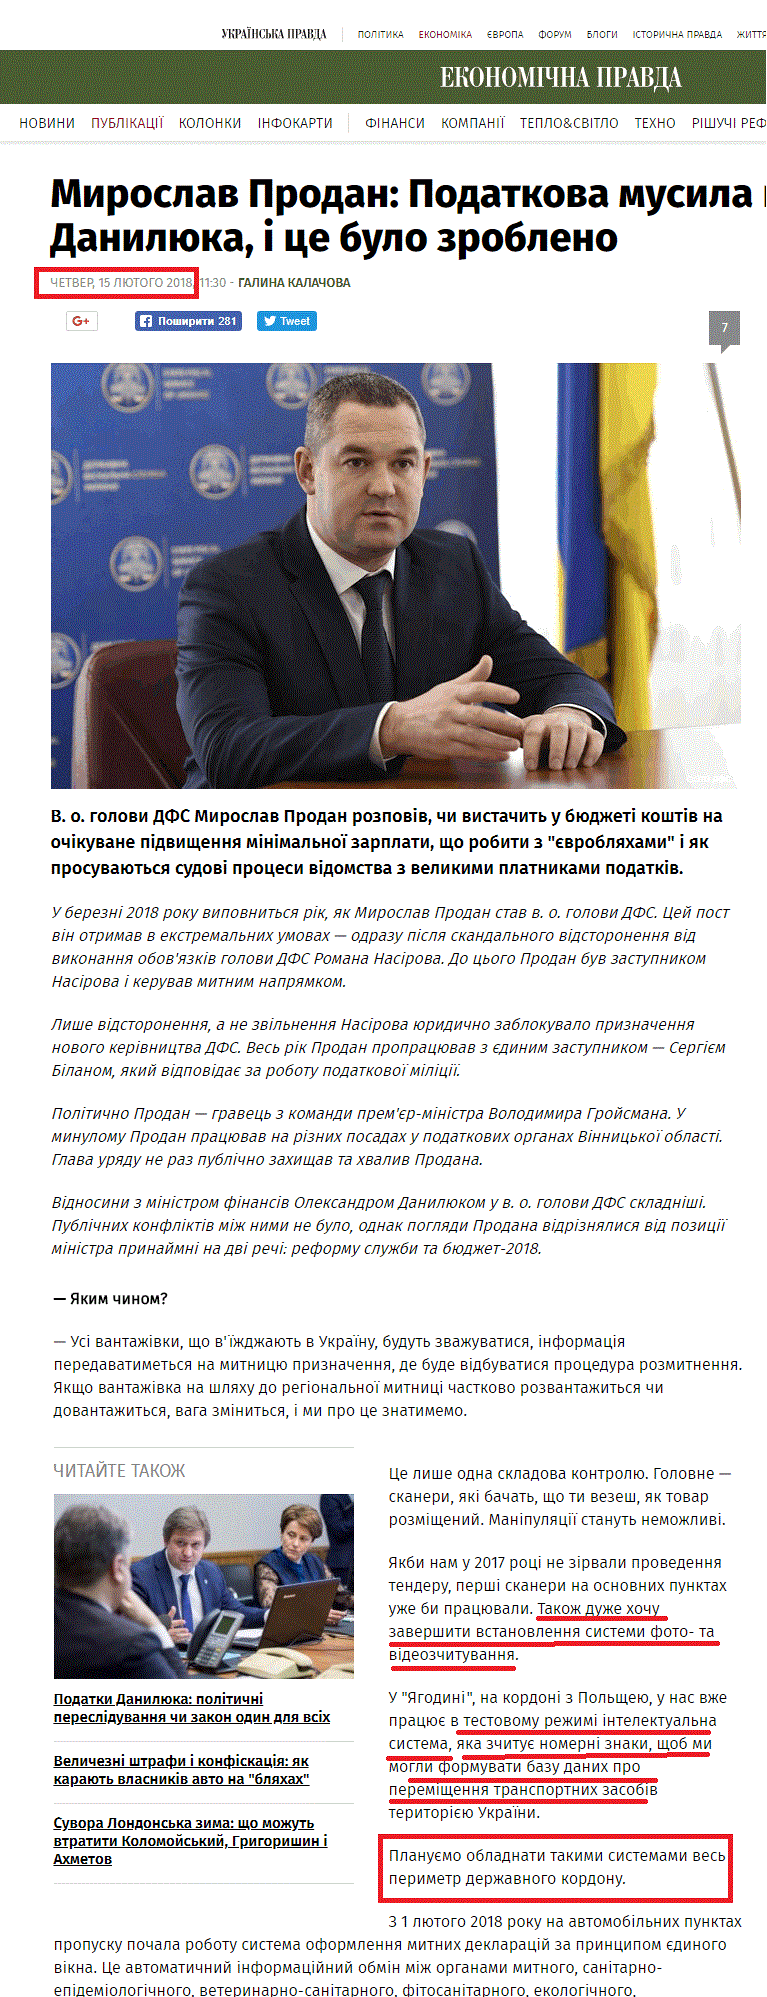 https://www.epravda.com.ua/publications/2018/02/15/634099/